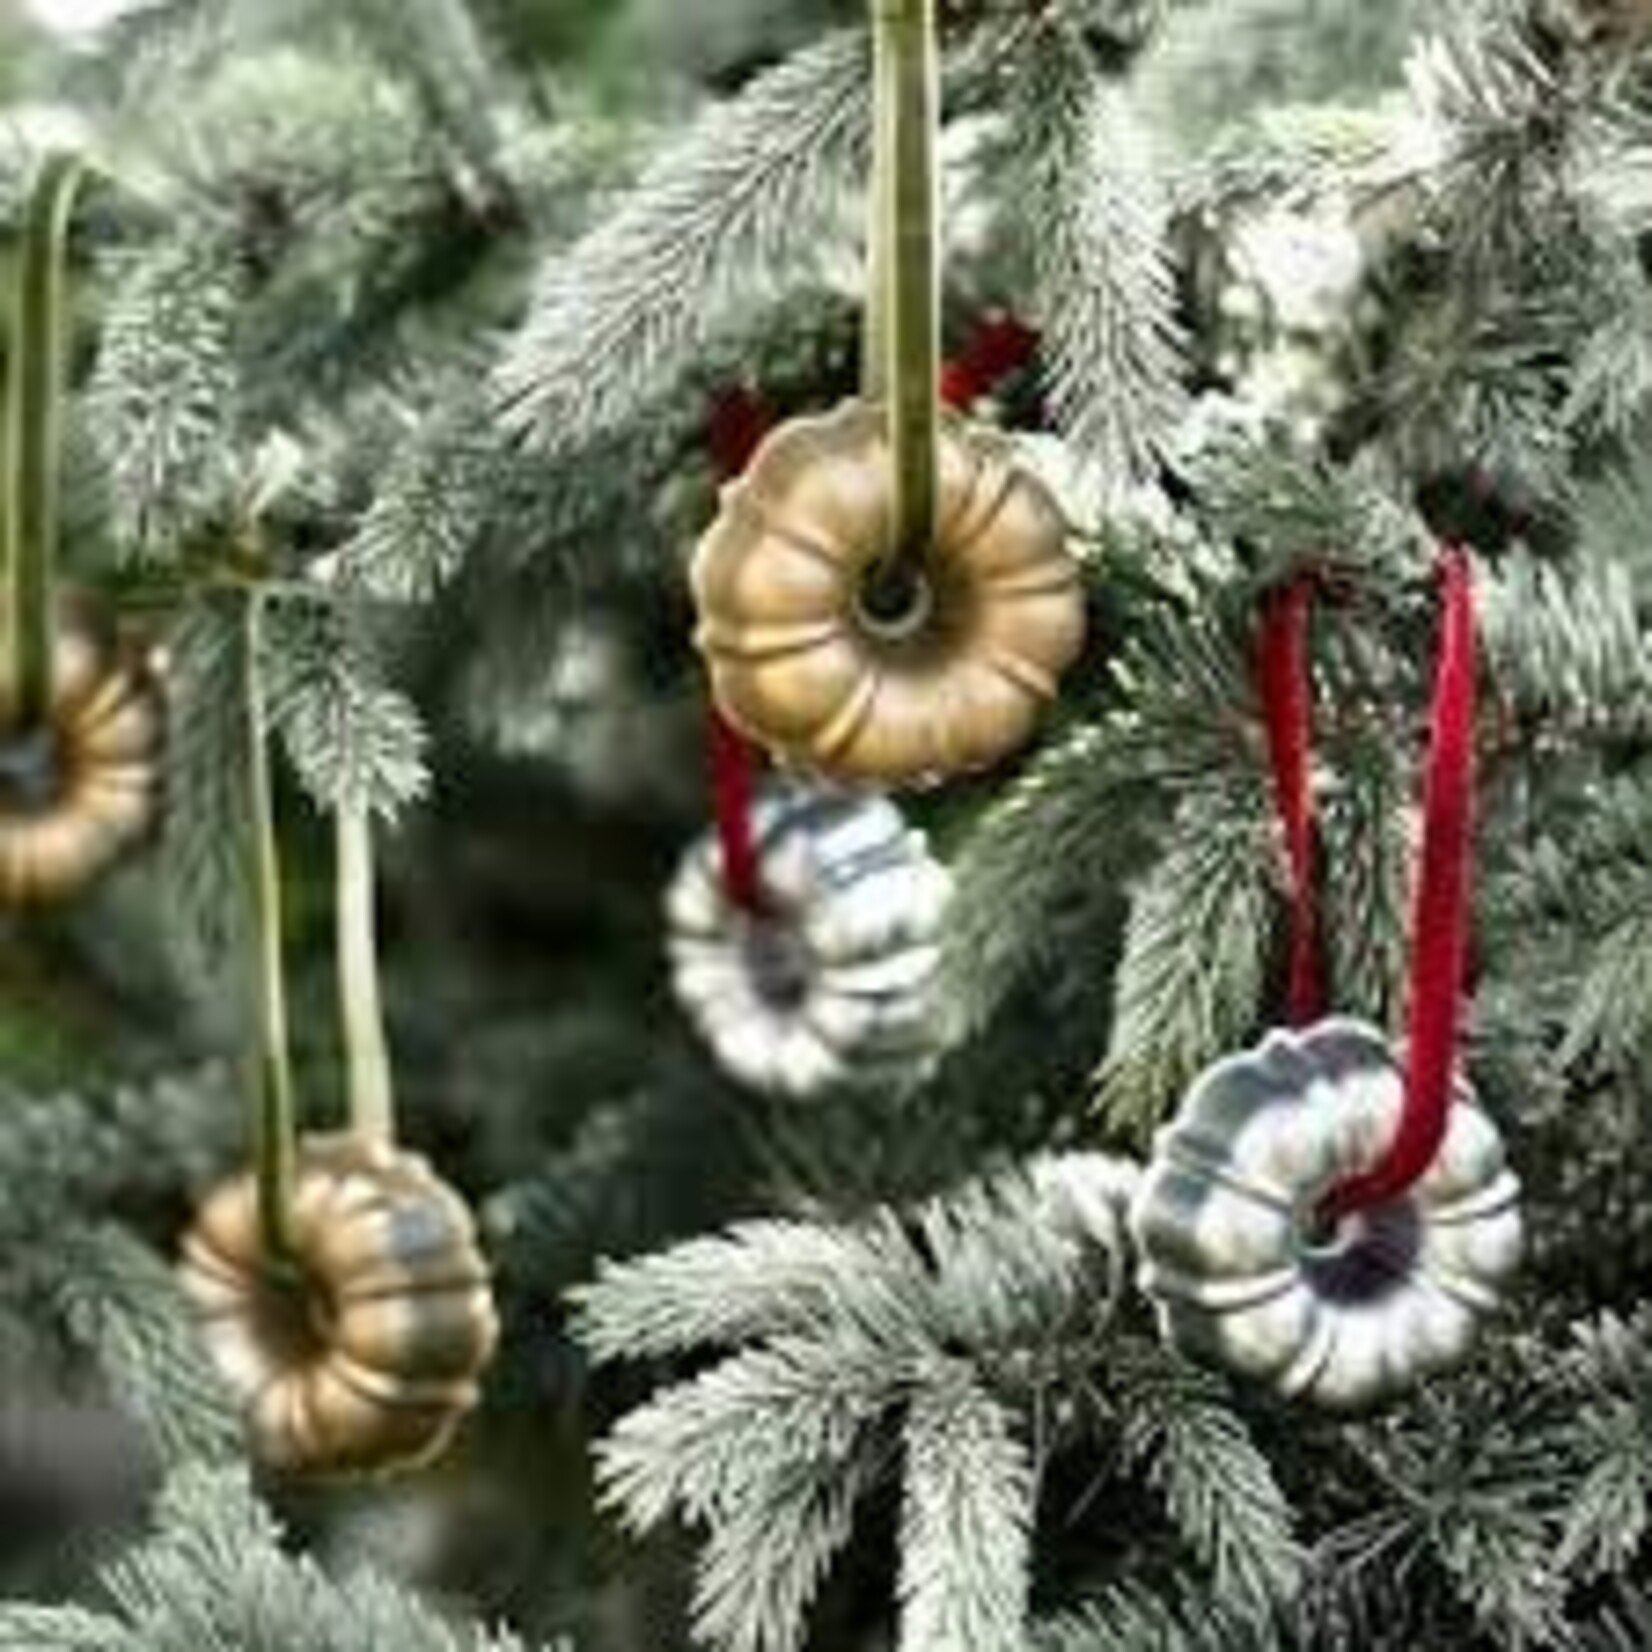 Nordic Ware Nordic Ware kerstboom versiering zilver Nordic Ware Christmas ornament silver 02147z